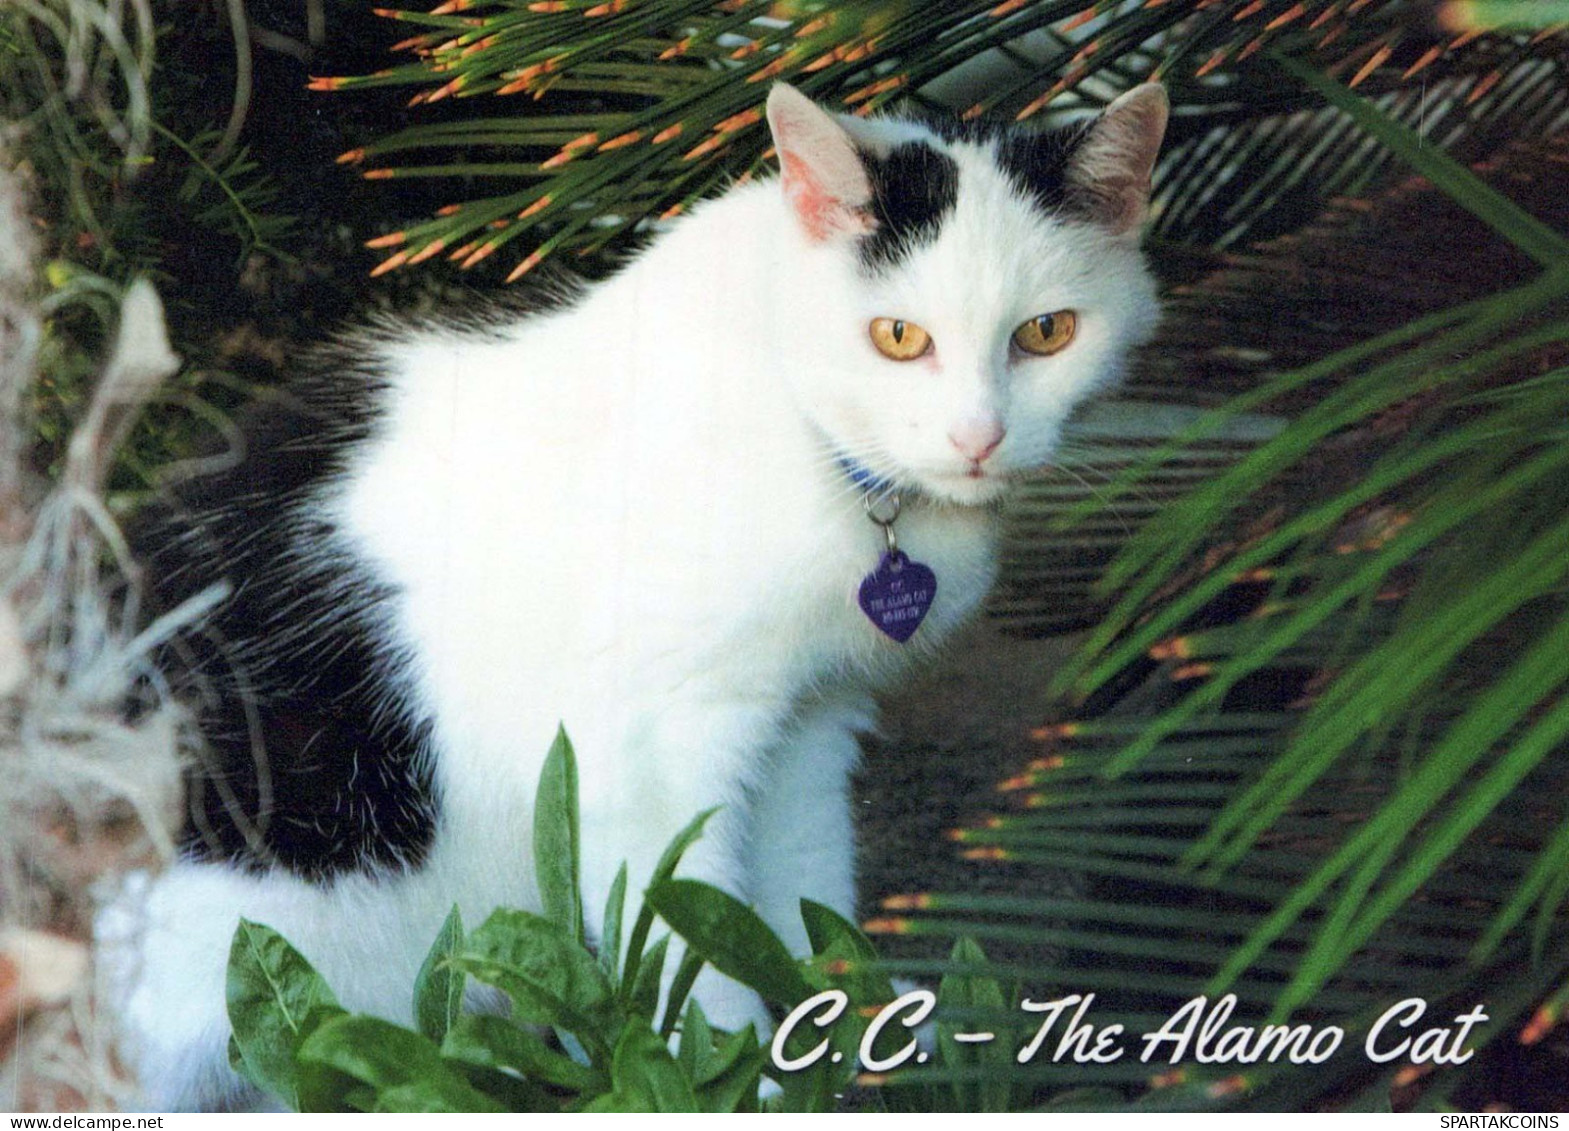 GATTO KITTY Animale Vintage Cartolina CPSM #PBQ740.A - Cats